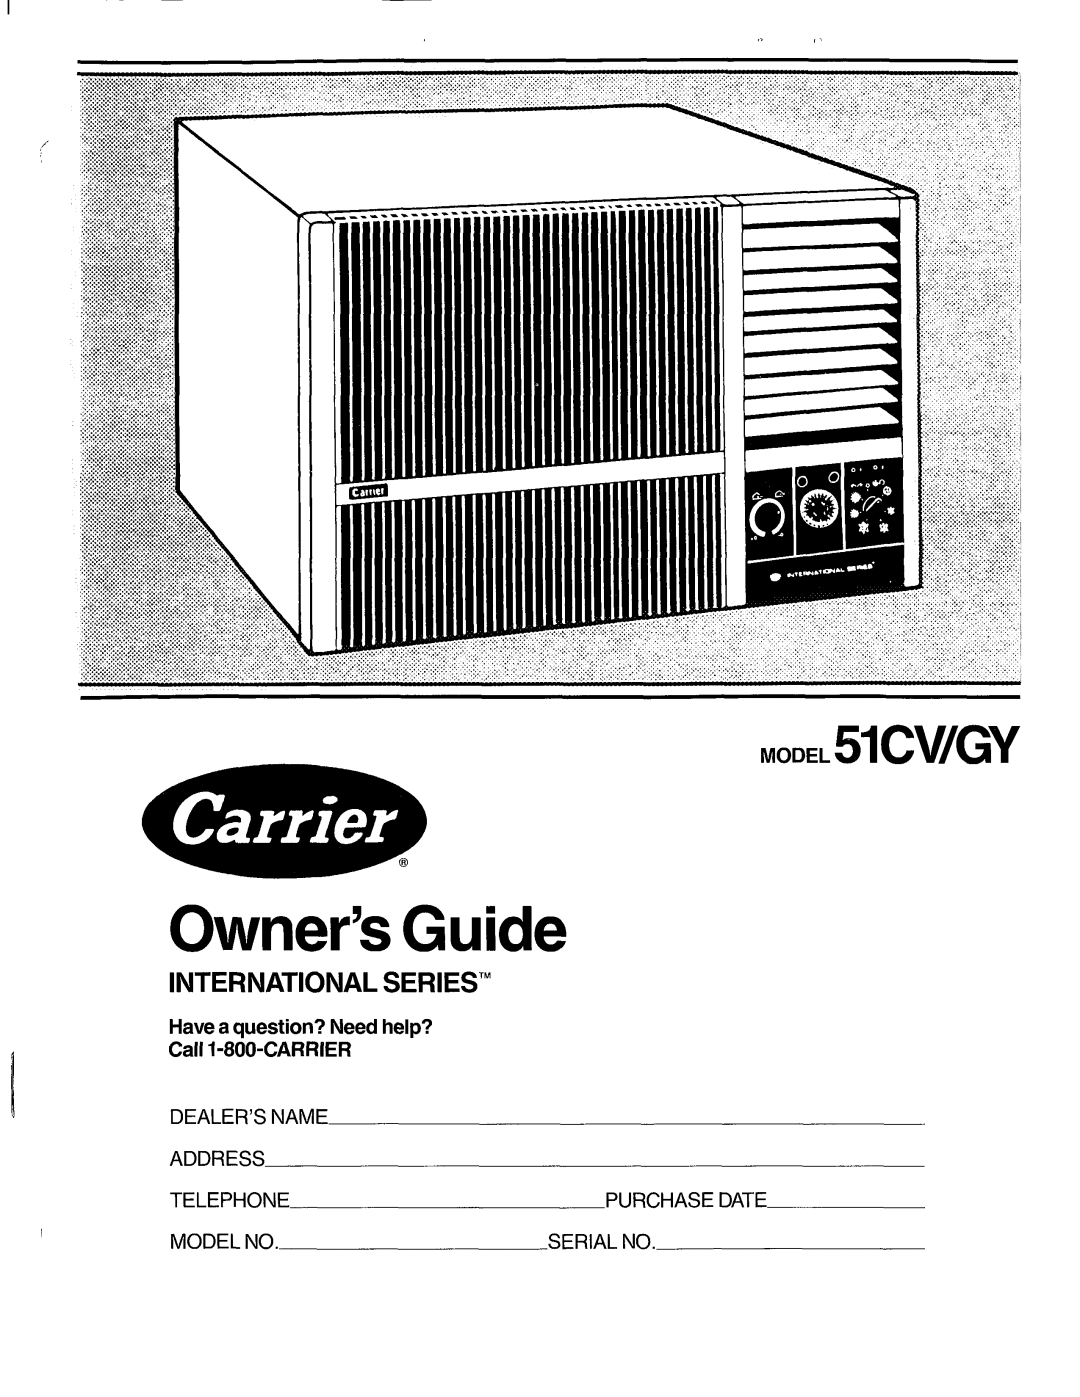 Carrier 51CV/GY manual 